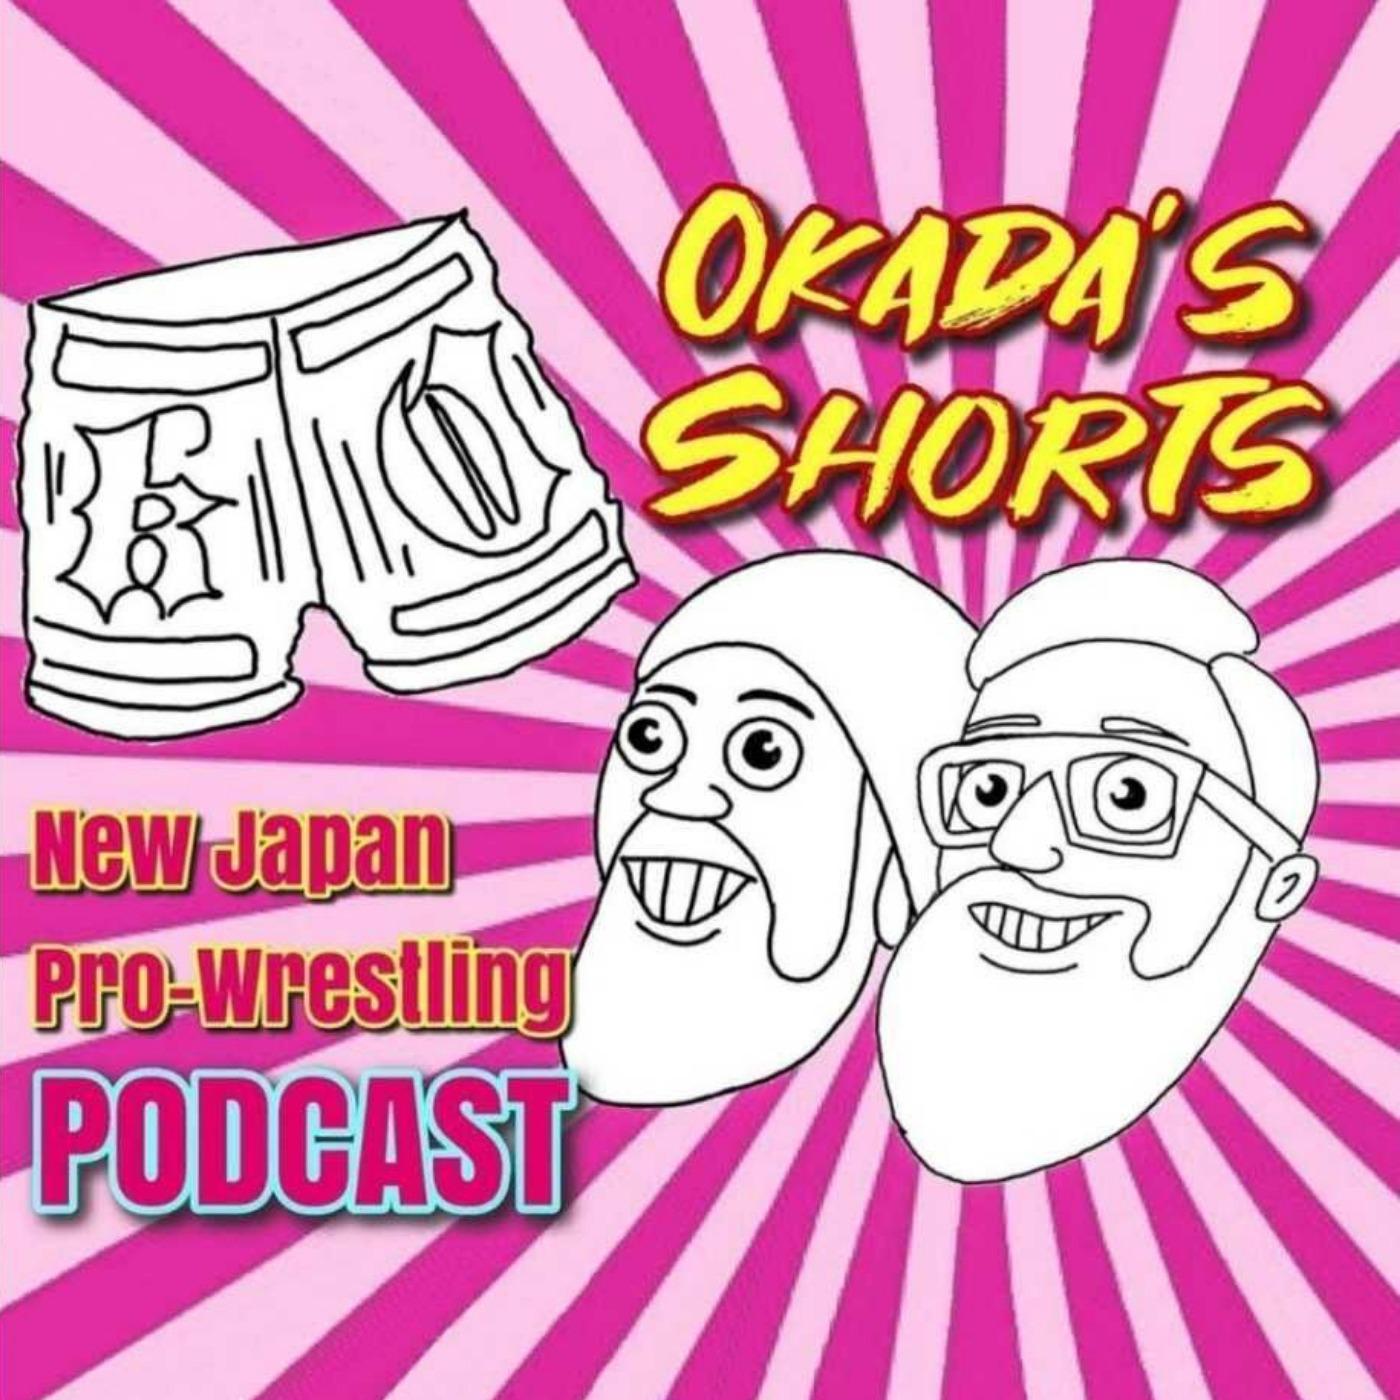 Okada's Shorts - A New Japan Pro Wrestling Podcast